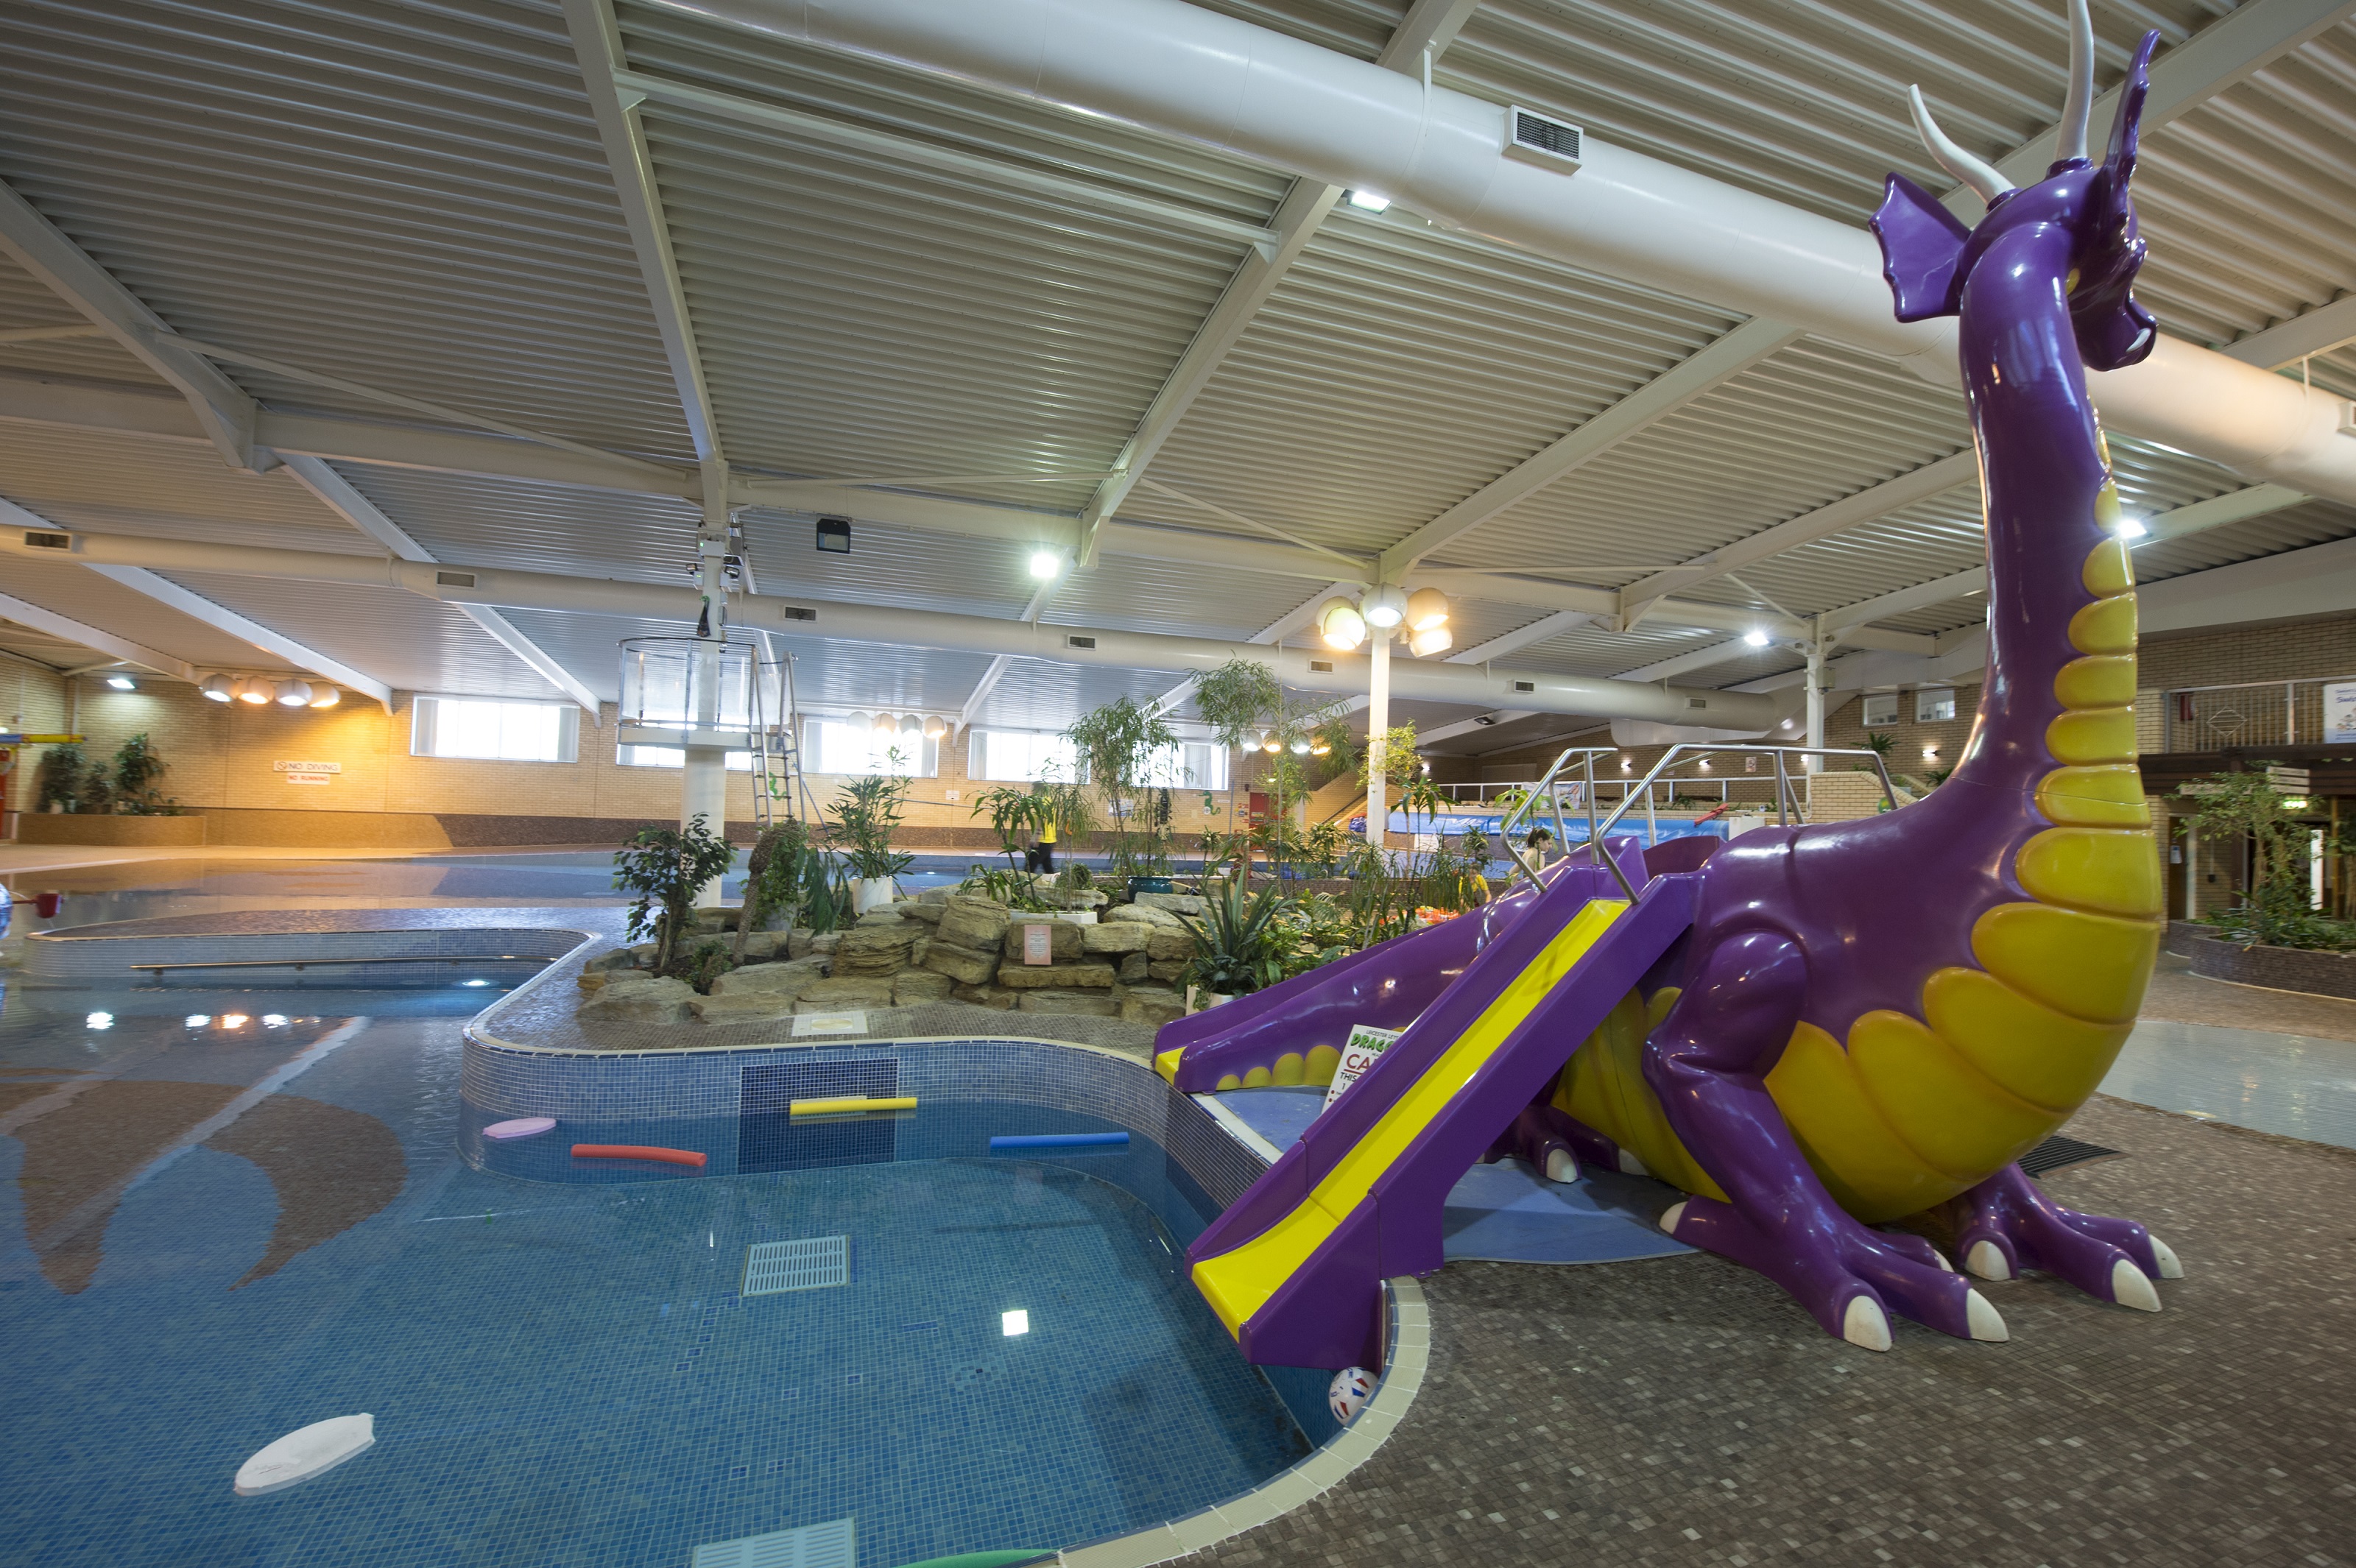 Dragon slide at Leicester Leys pool